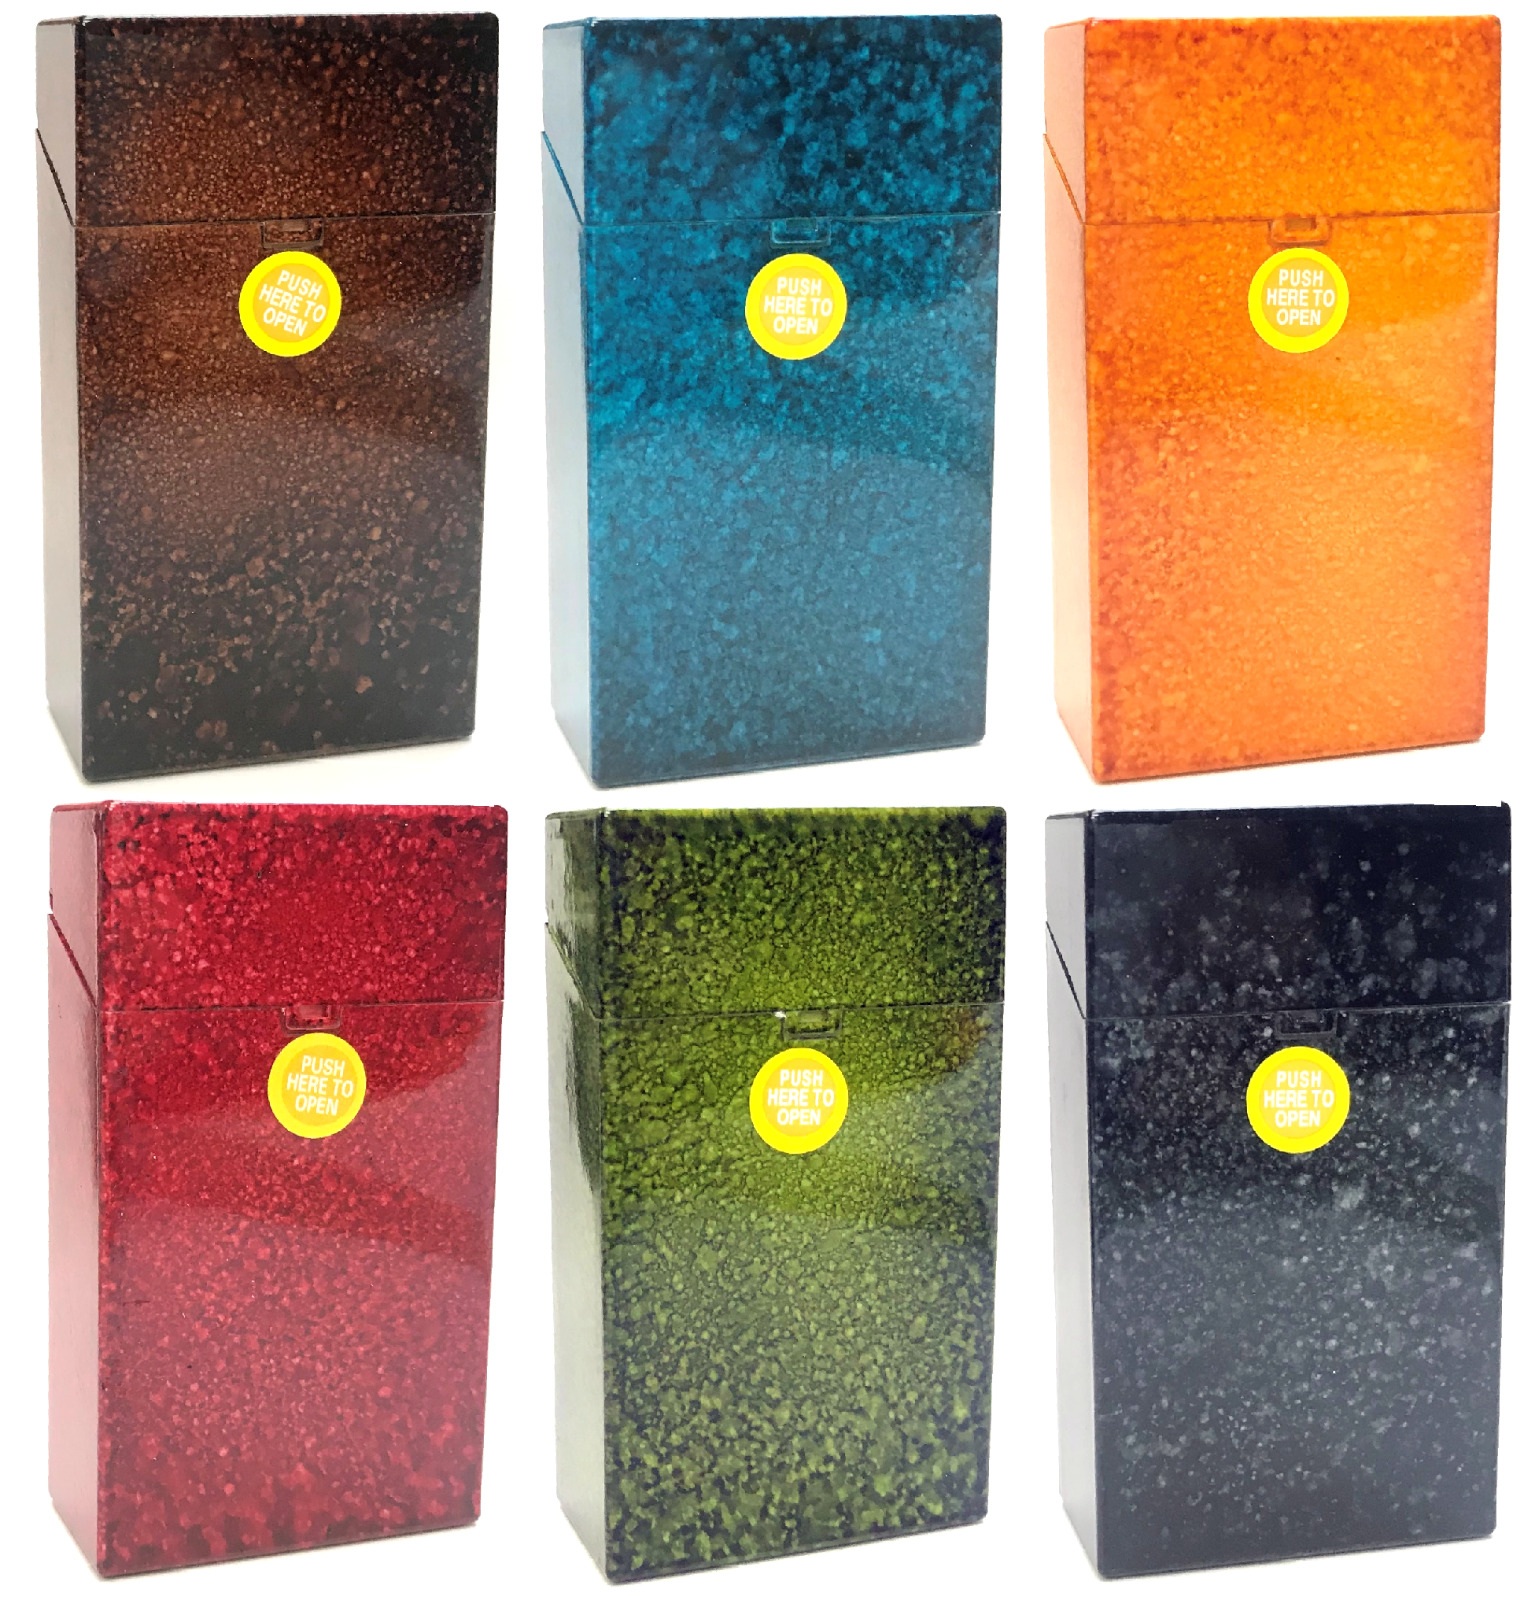 Eclipse Speckled Design Hard Plastic Crushproof Cigarette Case, 2ct, 100s, M11-2